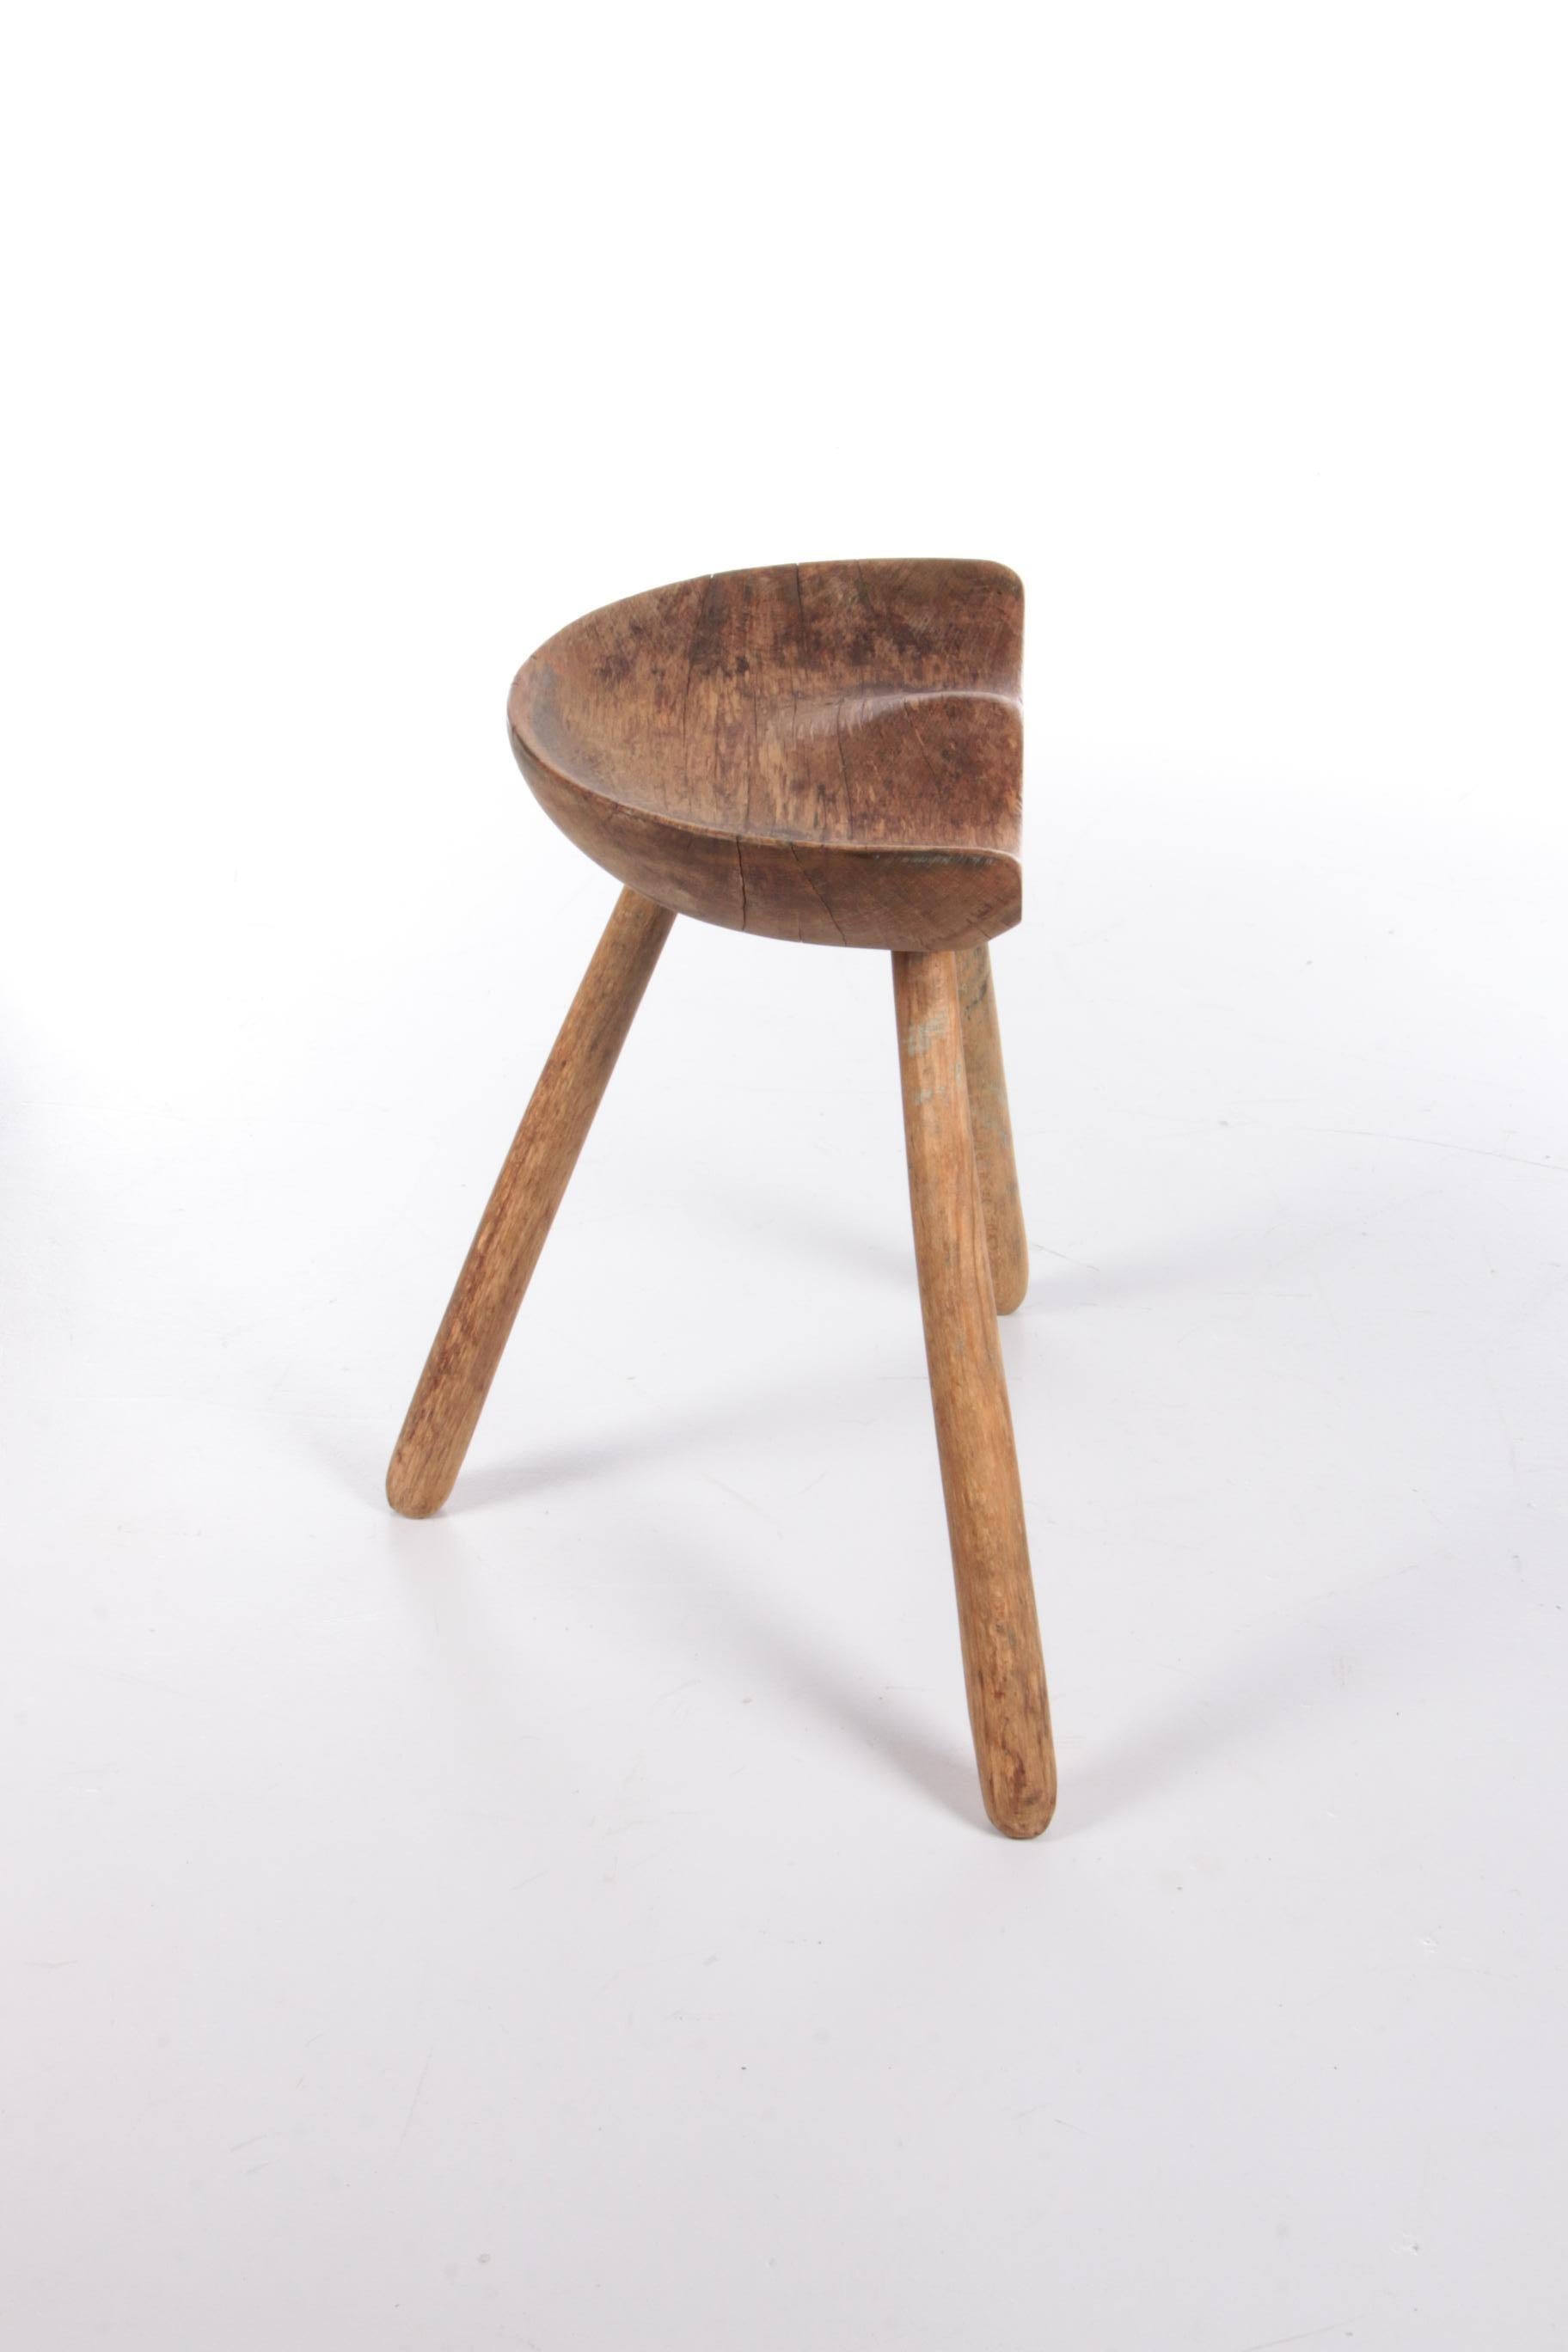 Mid-20th Century Vintage Beech tripod stool by Mogens Lassen, 1950s Denmark.